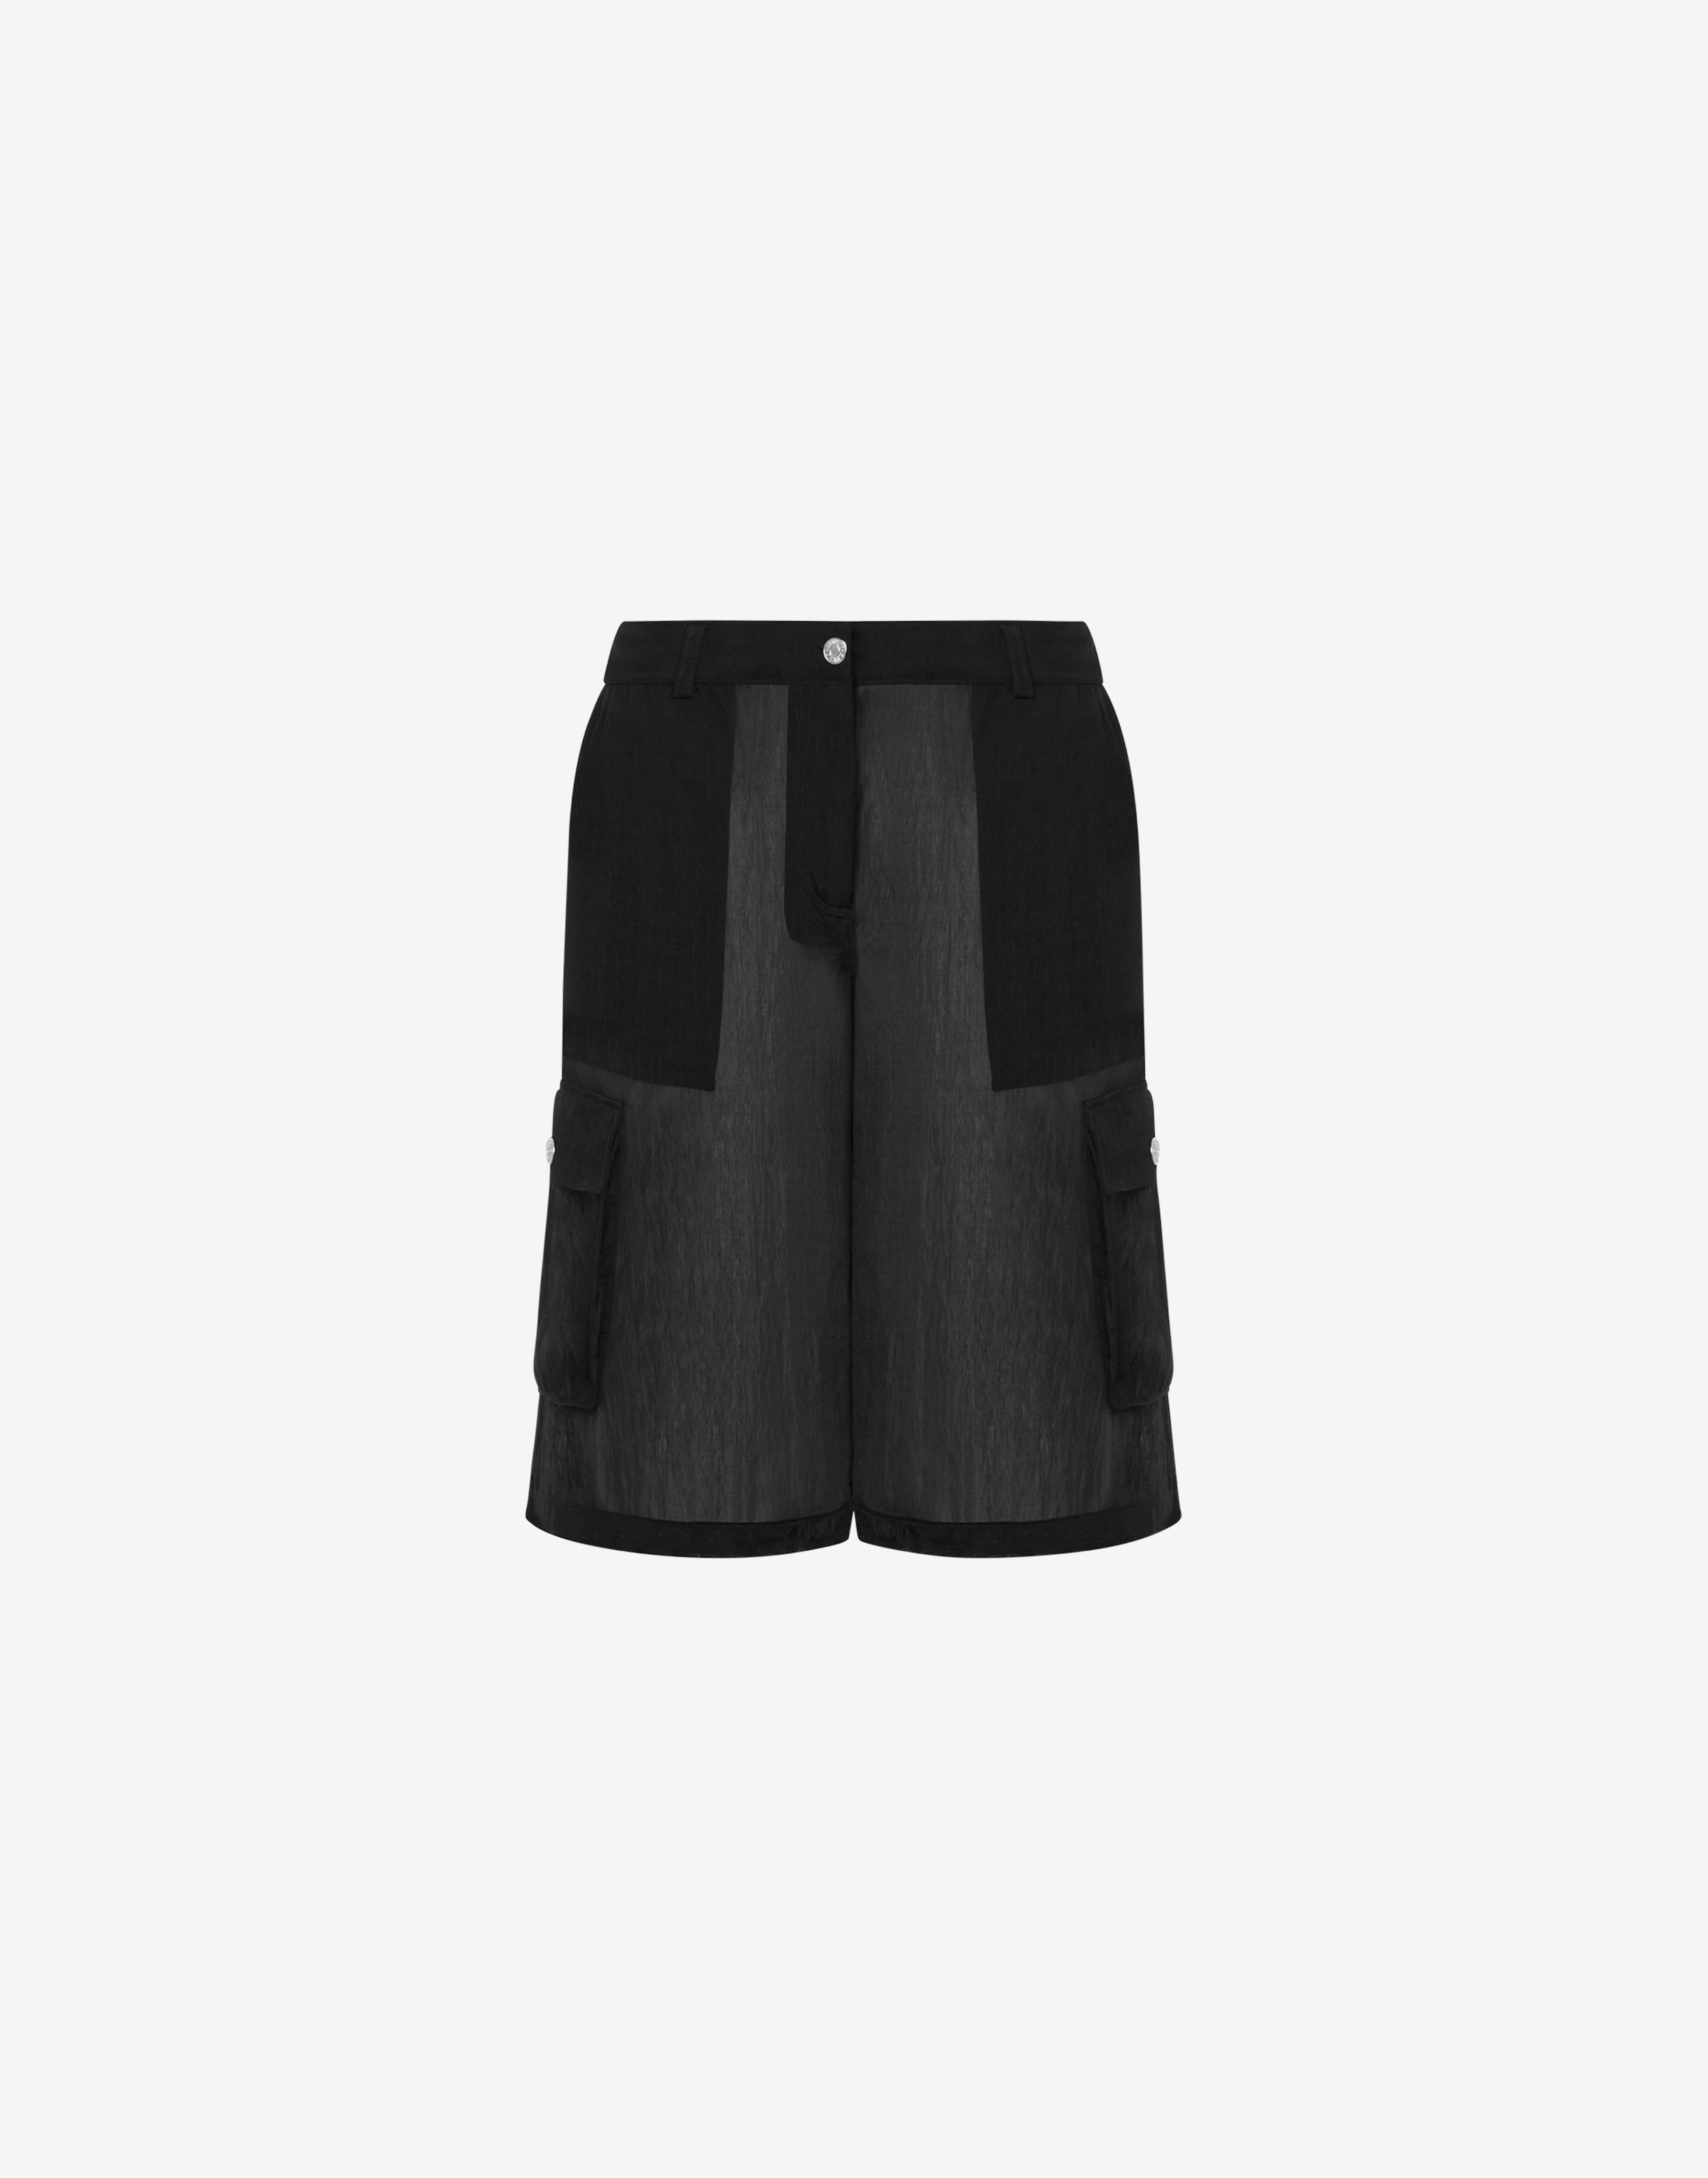 Lightweight nylon Bermuda shorts | Moschino Official Store